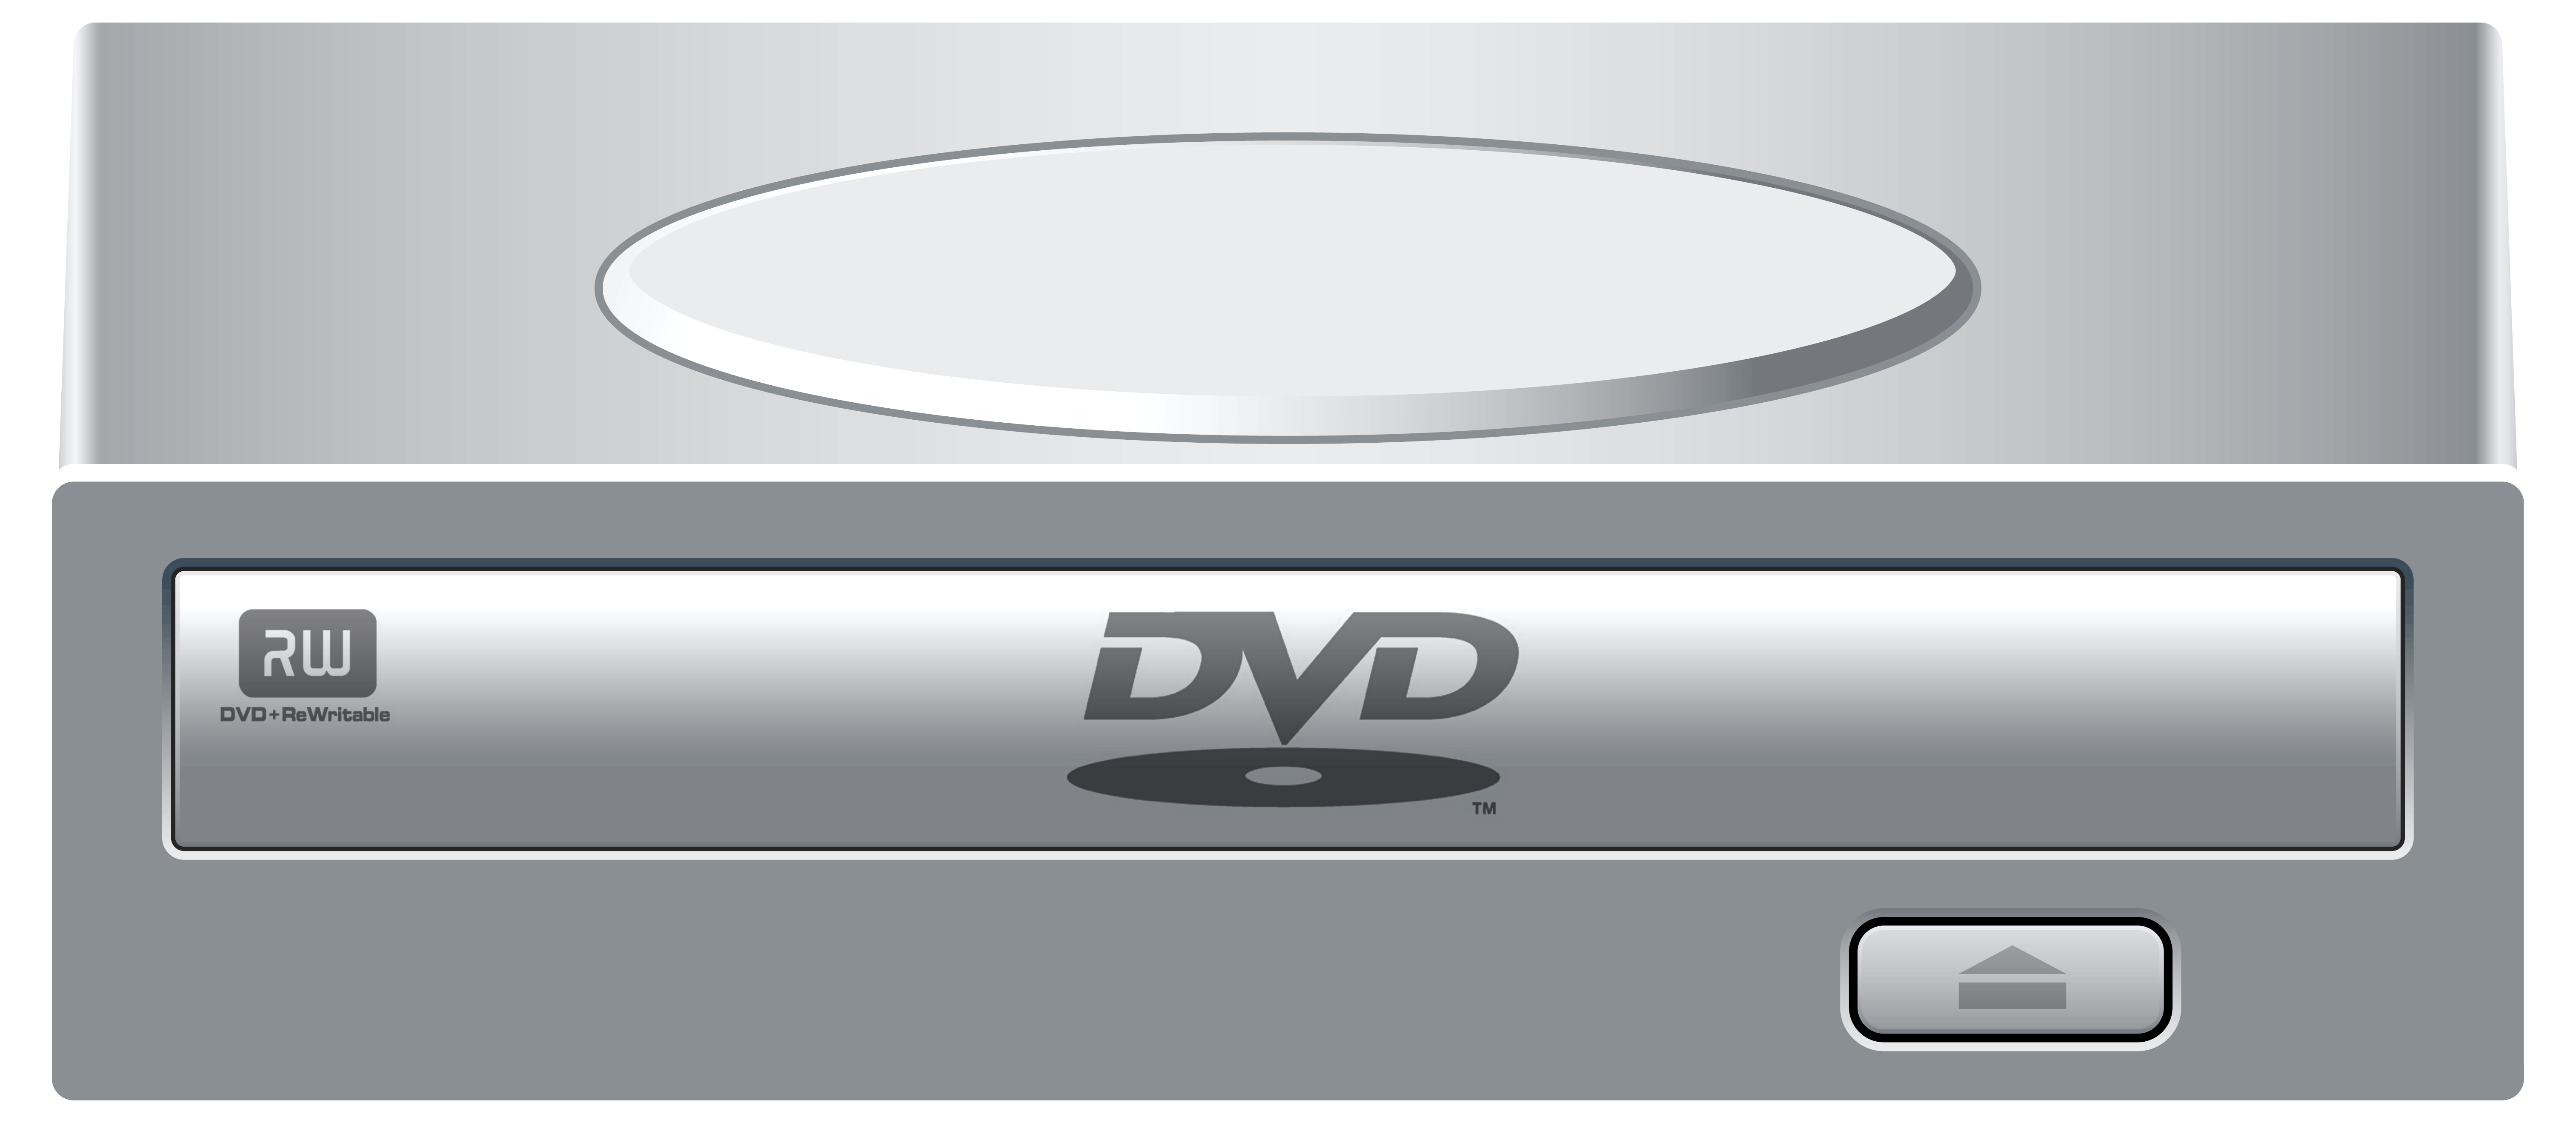 dvd player White external dvd rom drive clipart web png